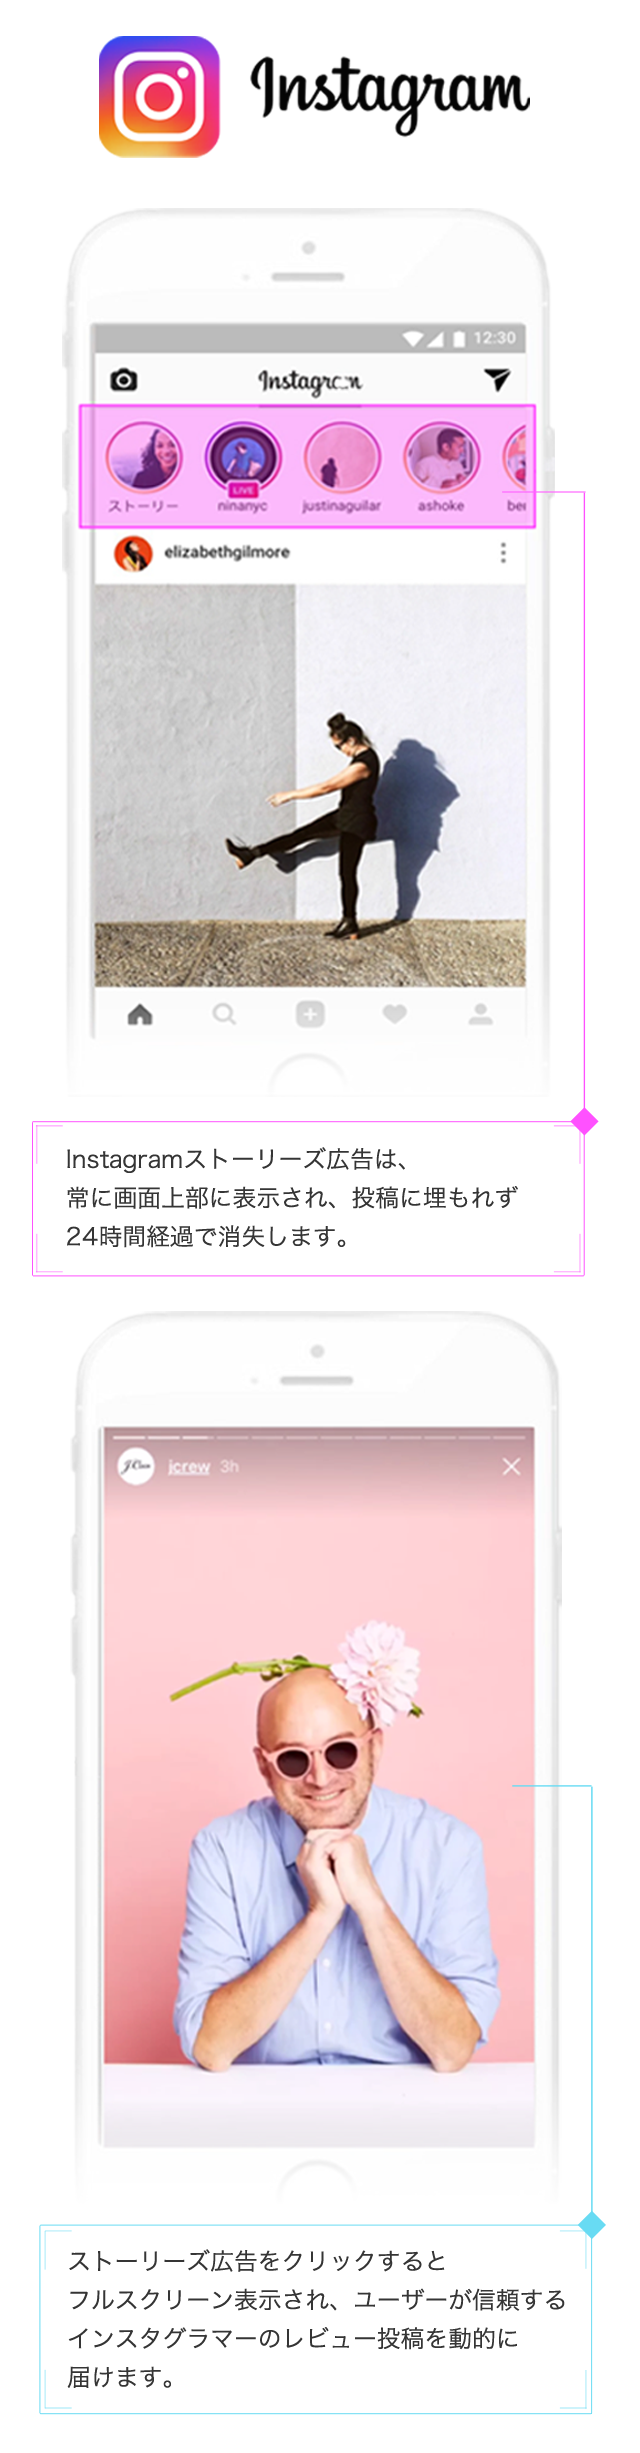 instagramストーリーズ広告